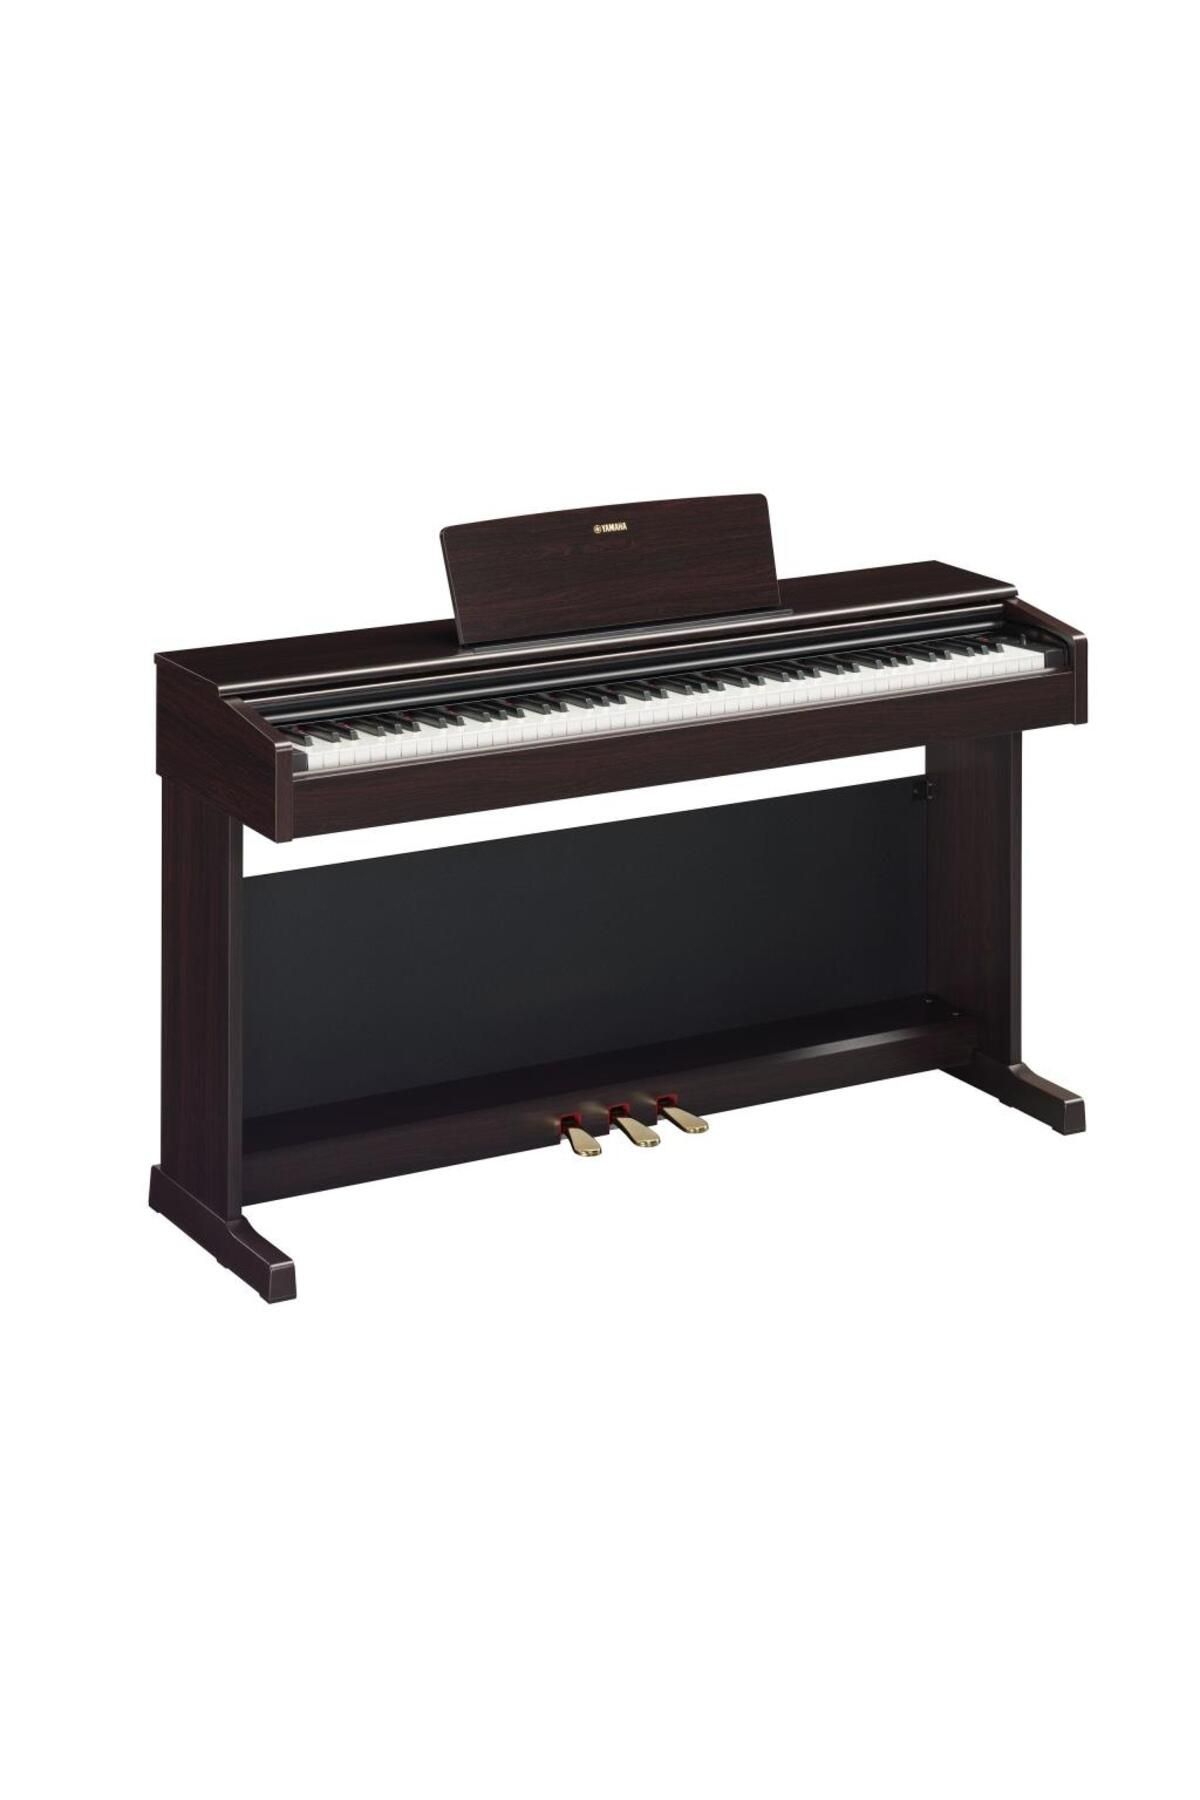 Yamaha Ydp145r Dijital Piyano (GÜL AĞACI) (TABURE KULAKLIK)